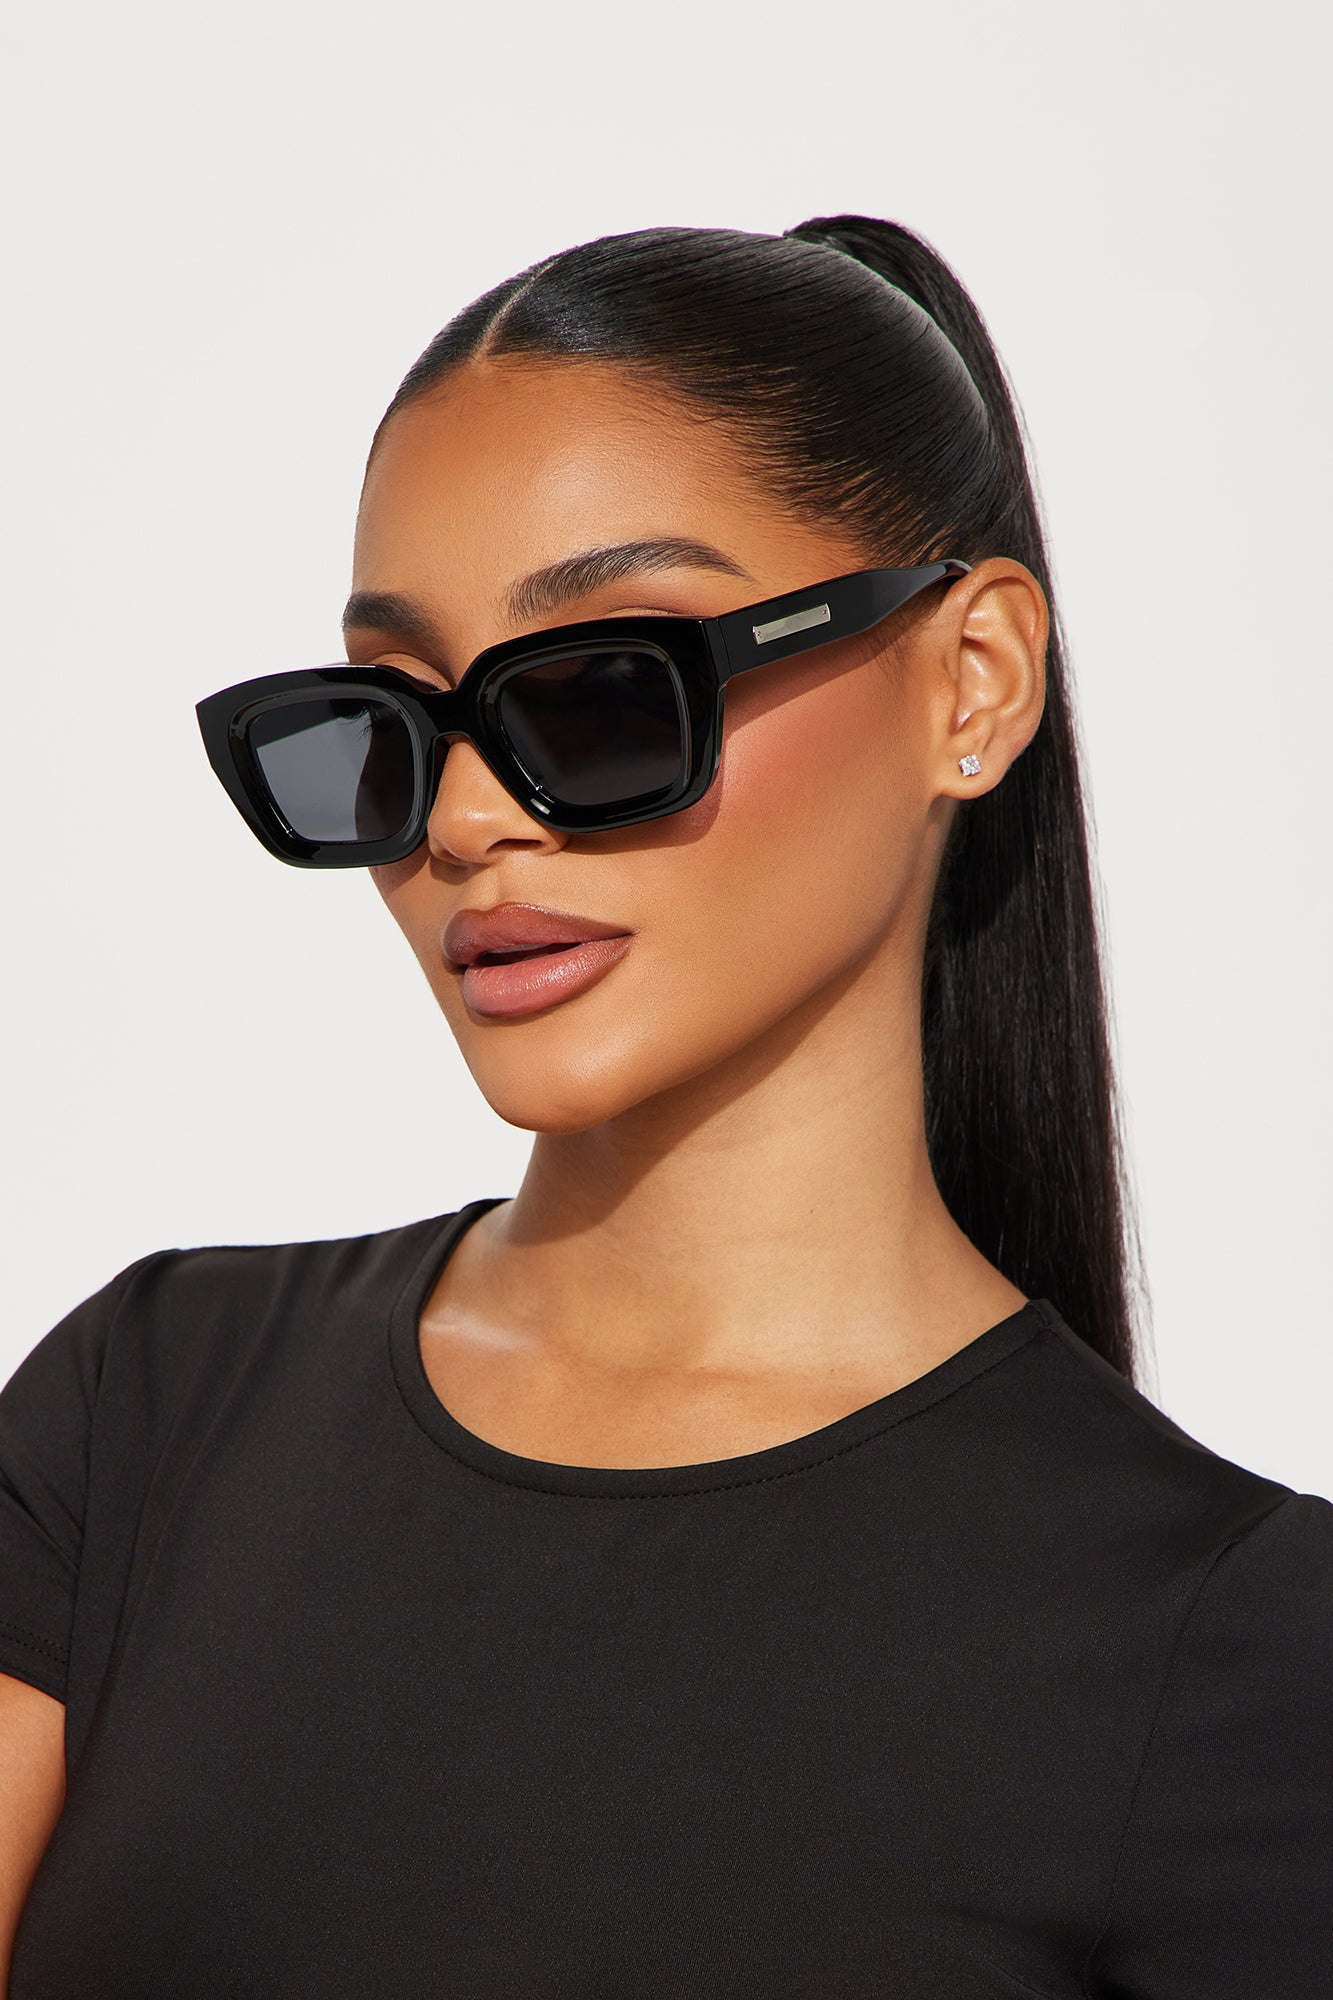 Throw Shade: Shop Summer's Best Sunglasses | Sunglasses women designer,  Spring sunglasses, Trending sunglasses